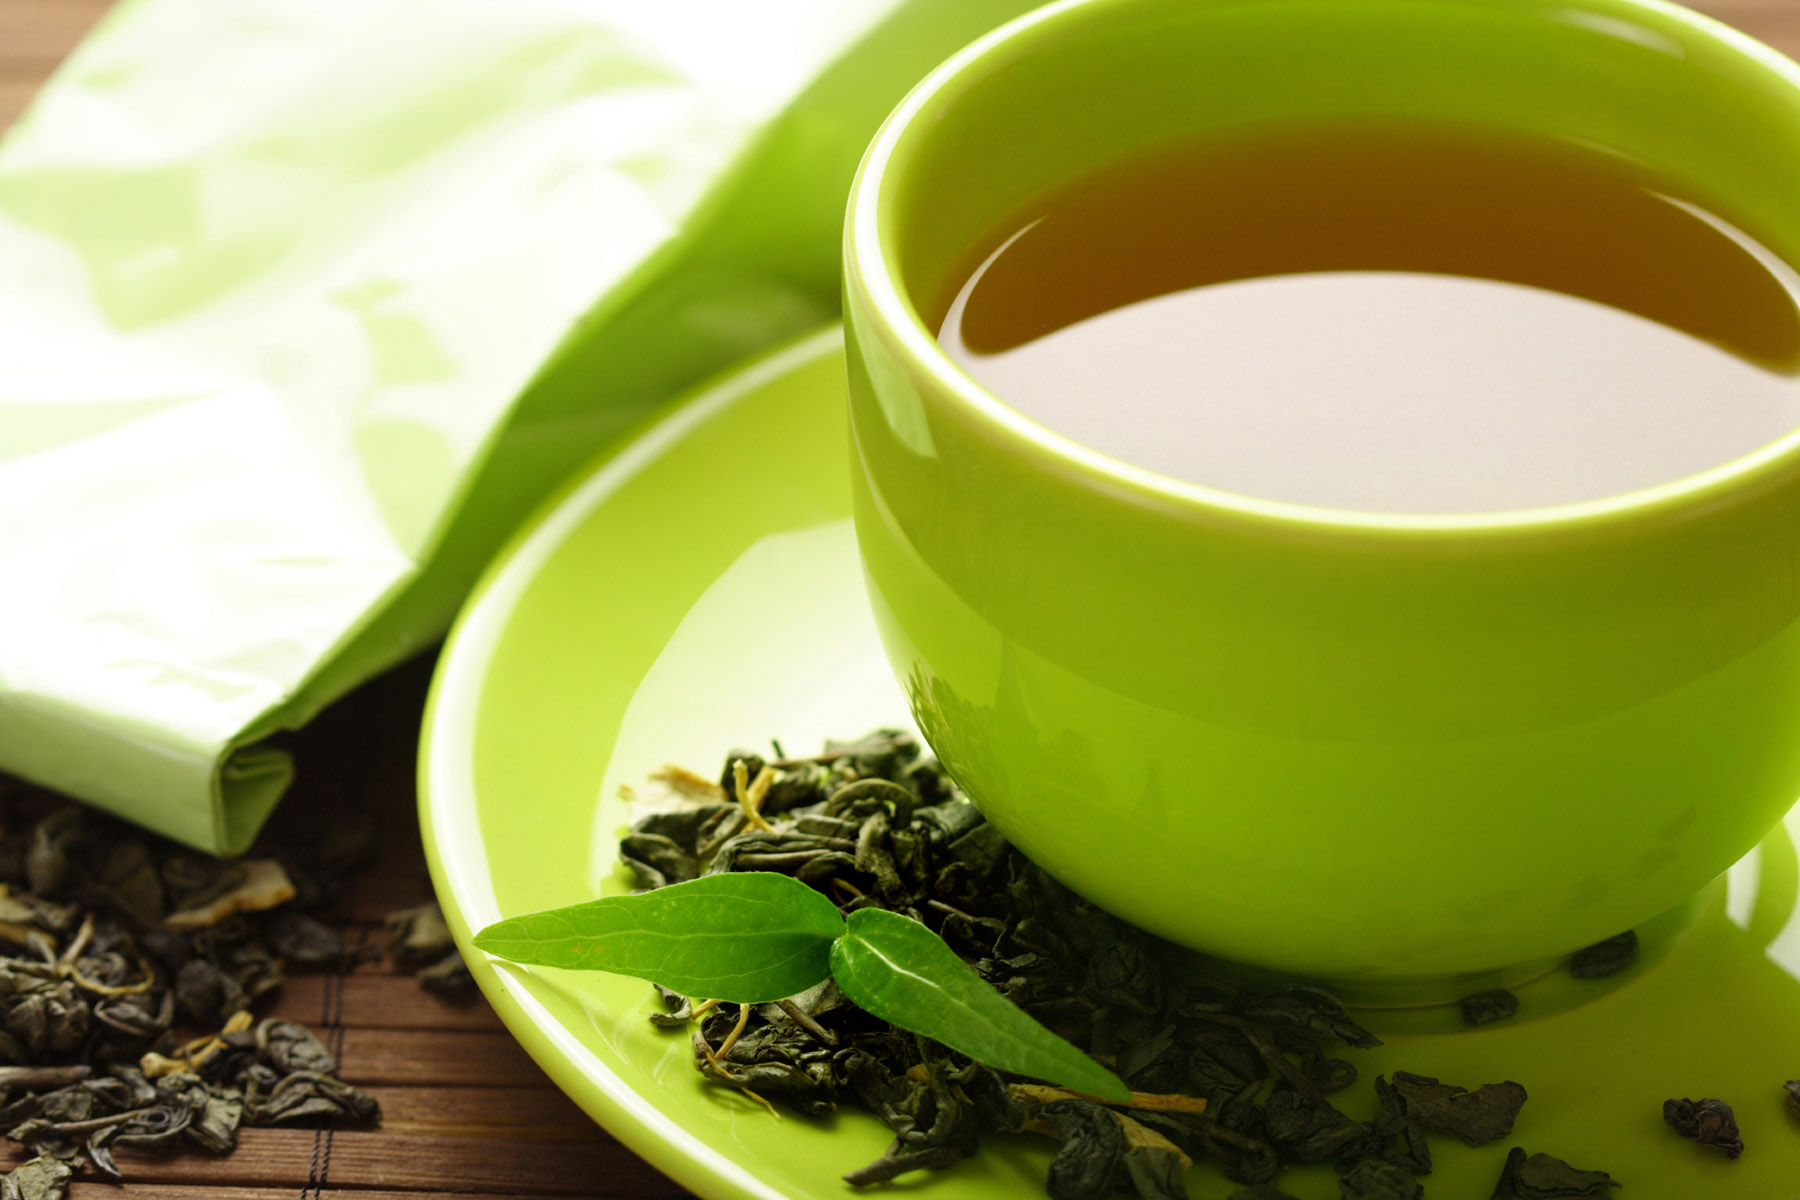 Drink Tea May Reduce Heart Disease Risk